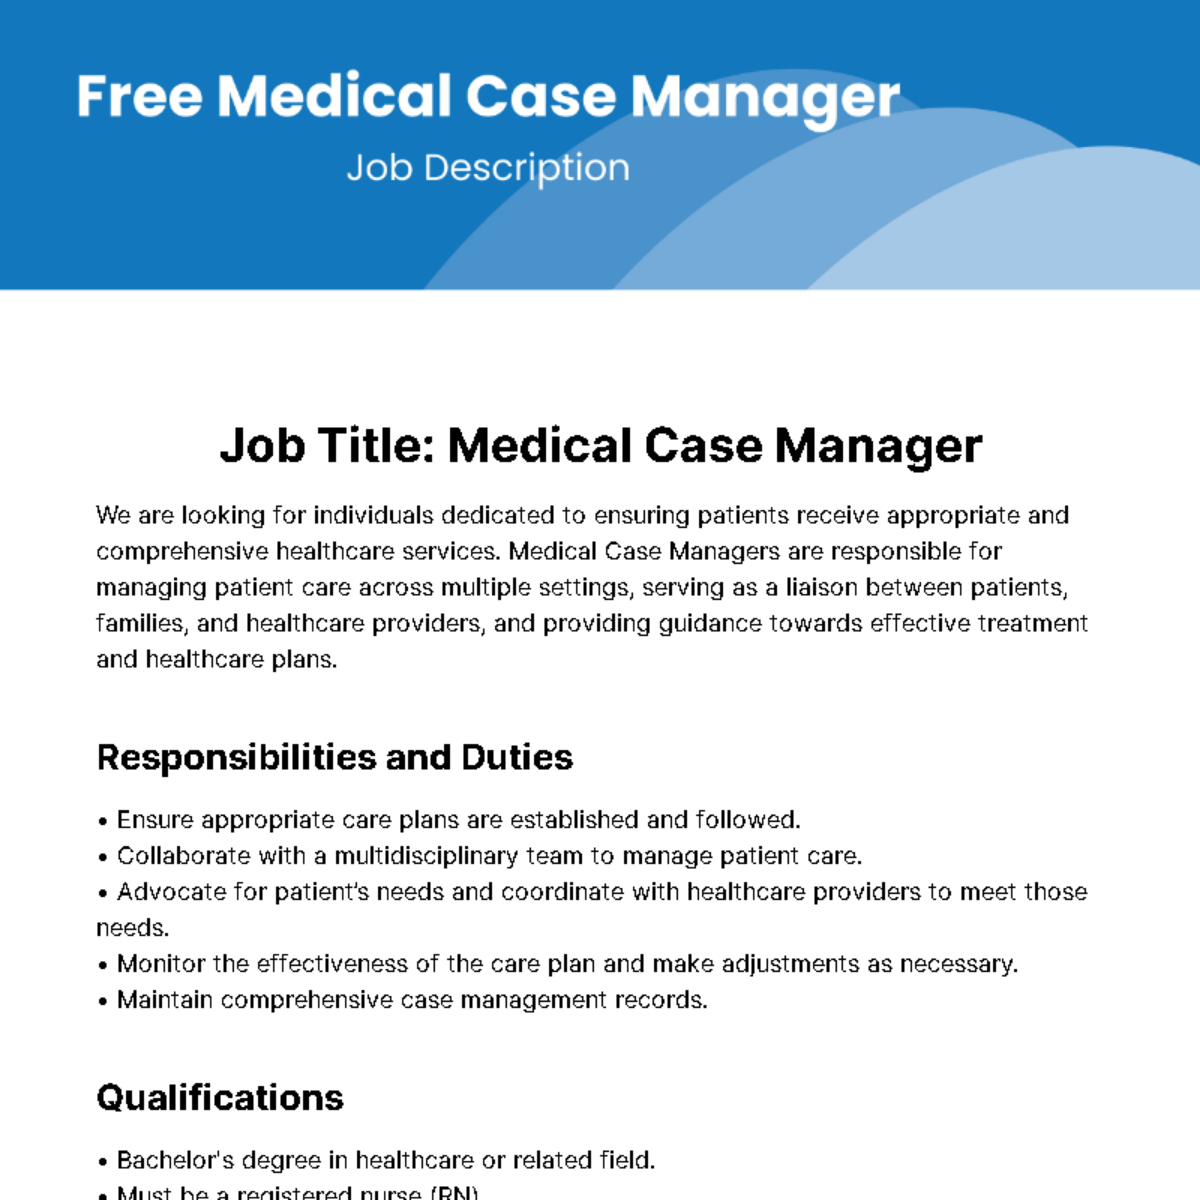 Medical Case Manager Job Description Template